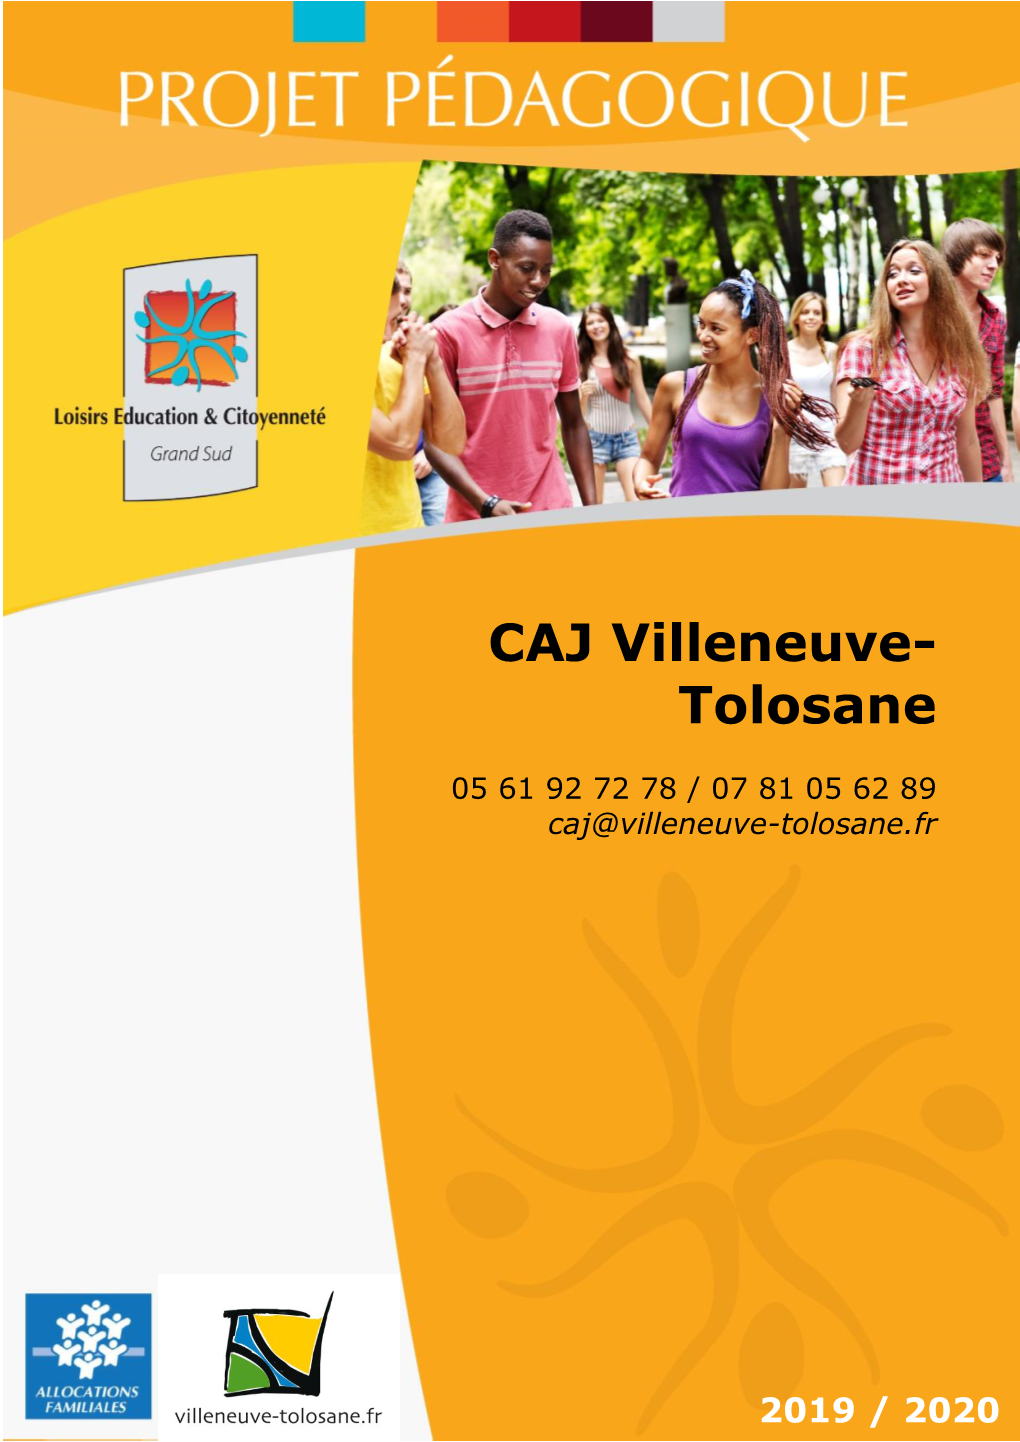 CAJ Villeneuve- Tolosane